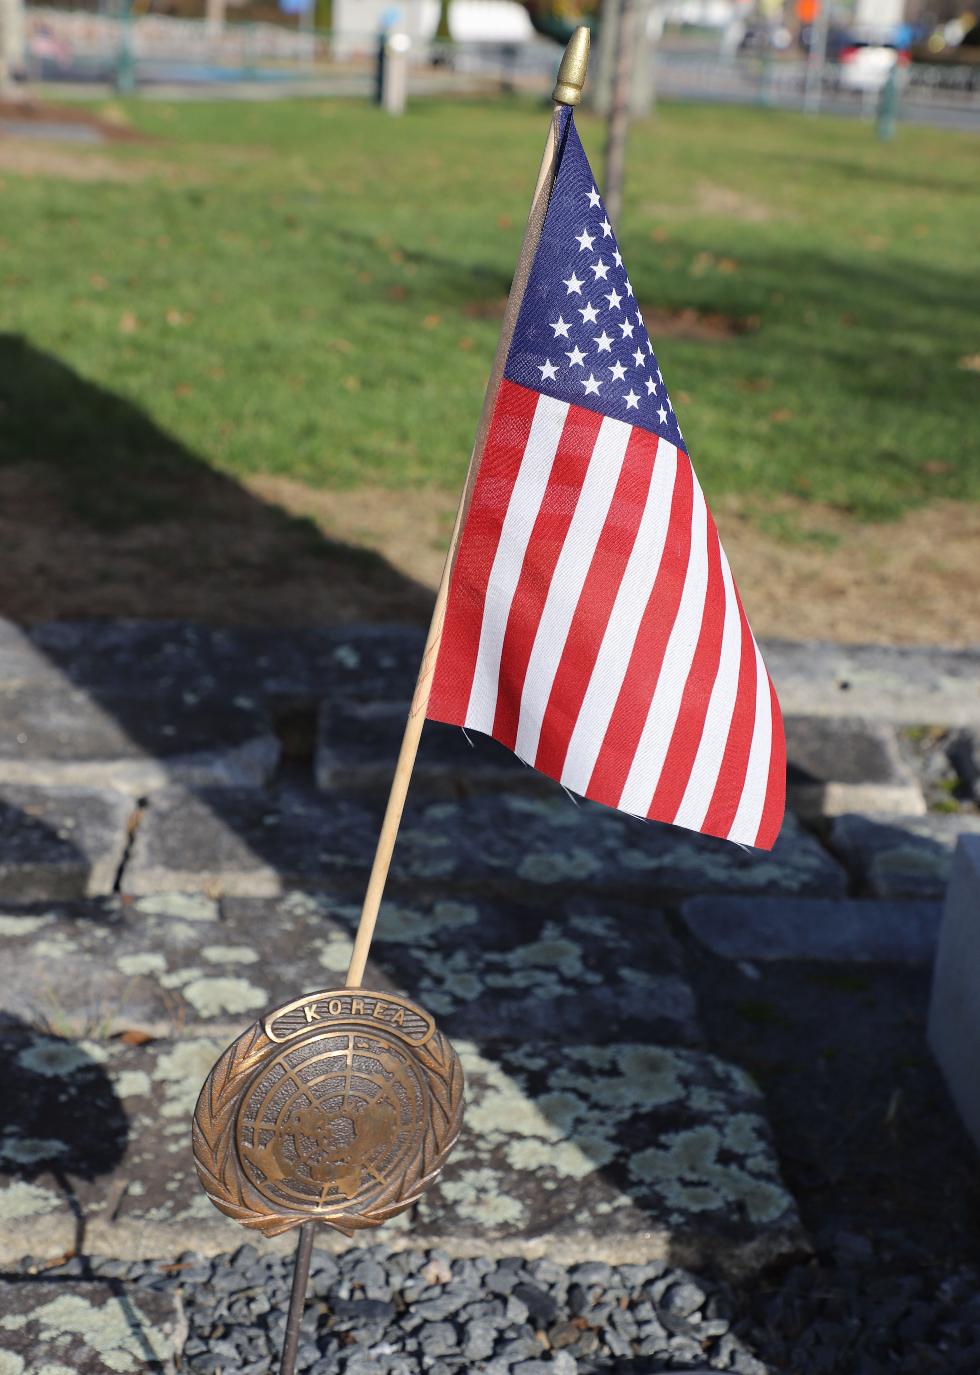 Norton Massachusetts Korean War Veterans Memorial